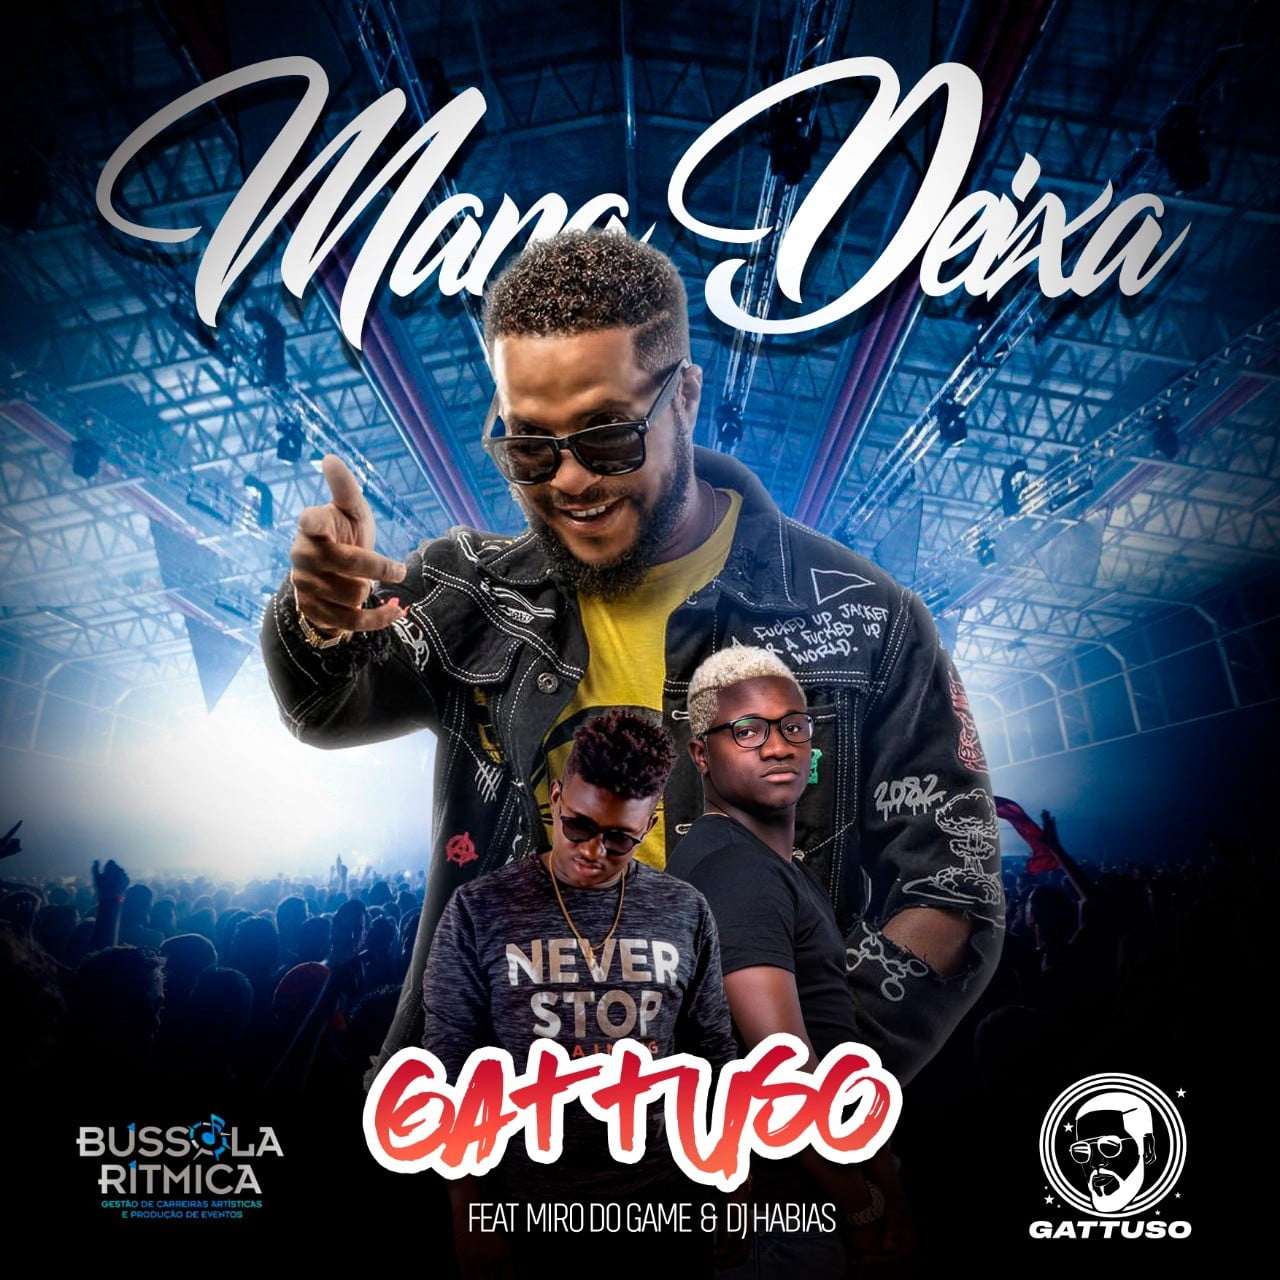 Gattuso - Mana Deixa (feat. Miro Do Game & DJ Habias)